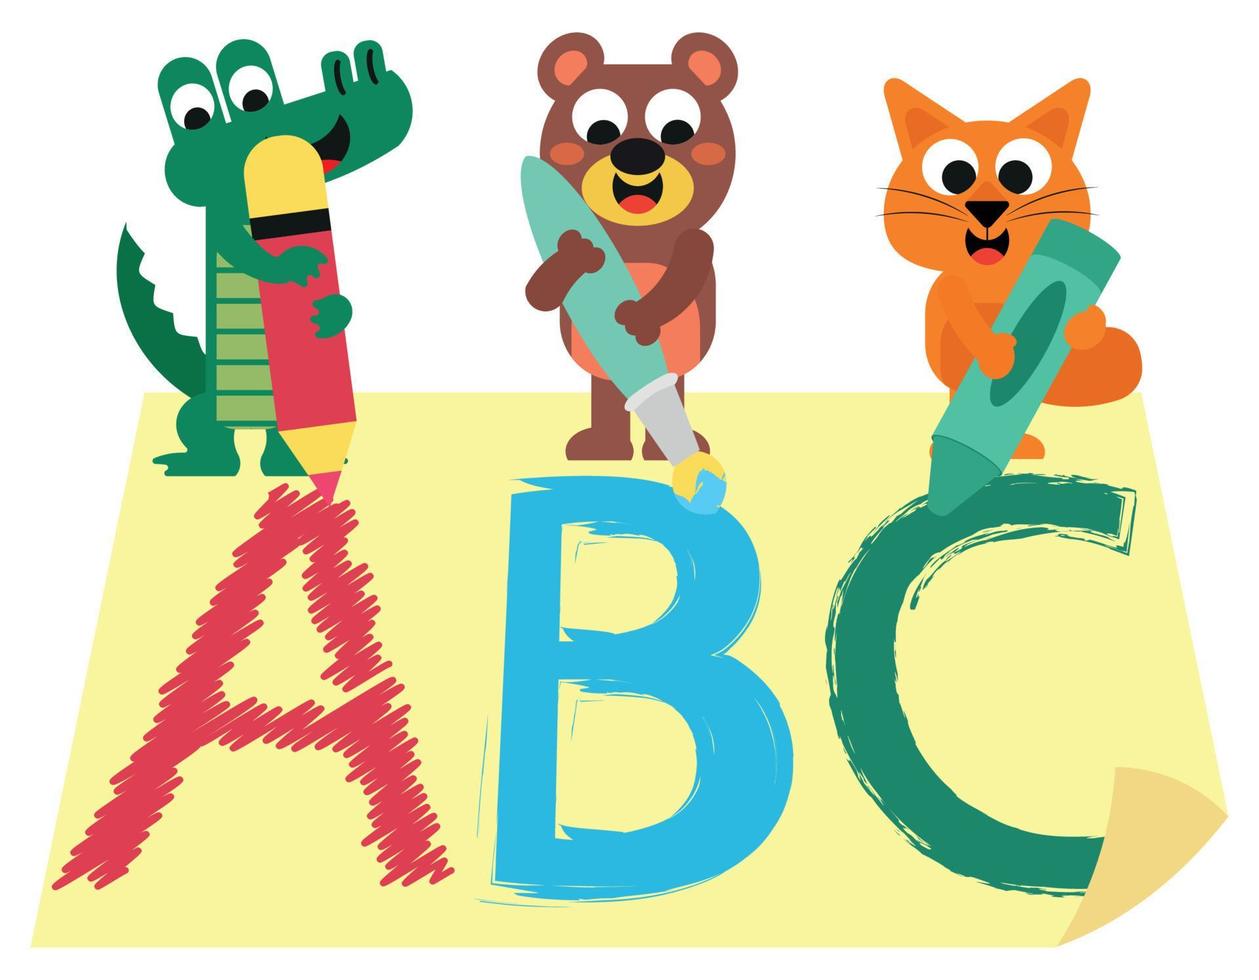 animais fofos desenham letras abc e pintam vetor